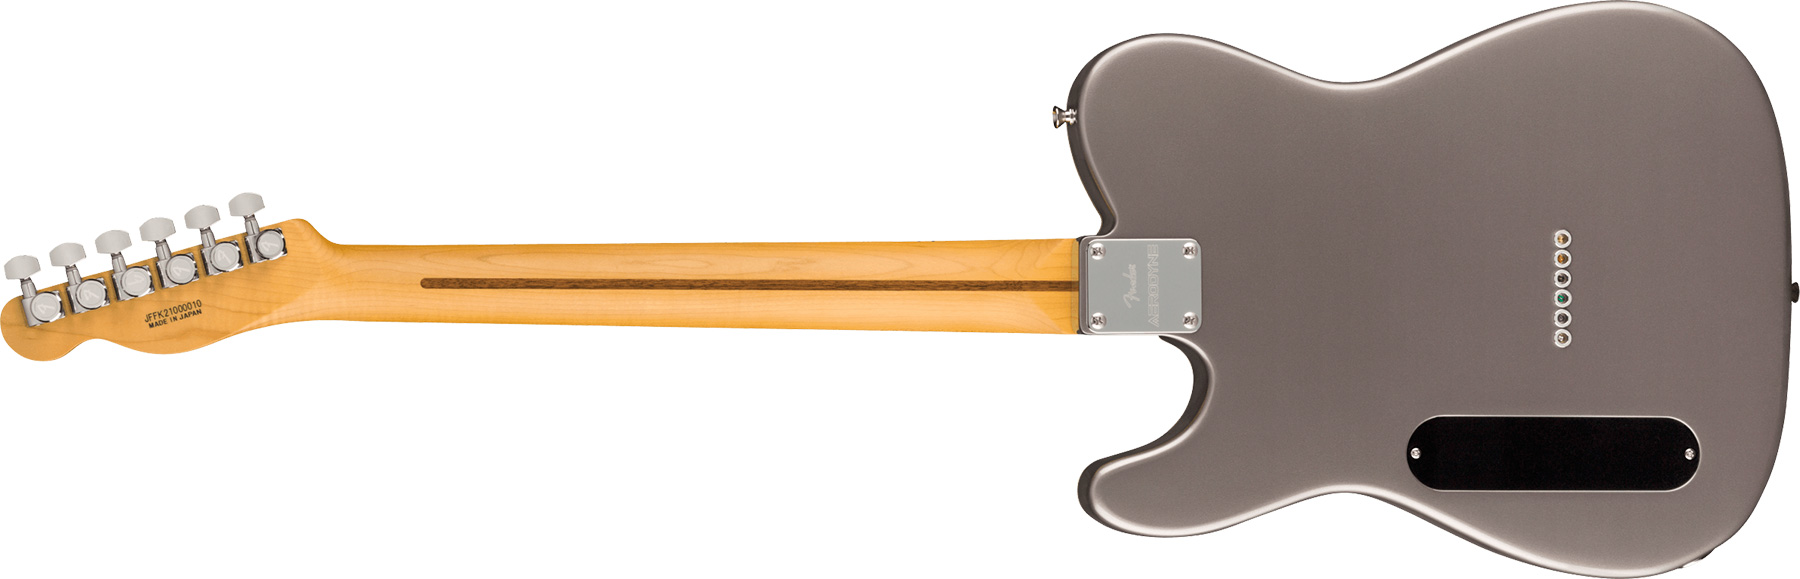 Fender Tele Aerodyne Special Jap 2s Ht Mn - Dolphin Gray Metallic - Televorm elektrische gitaar - Variation 1